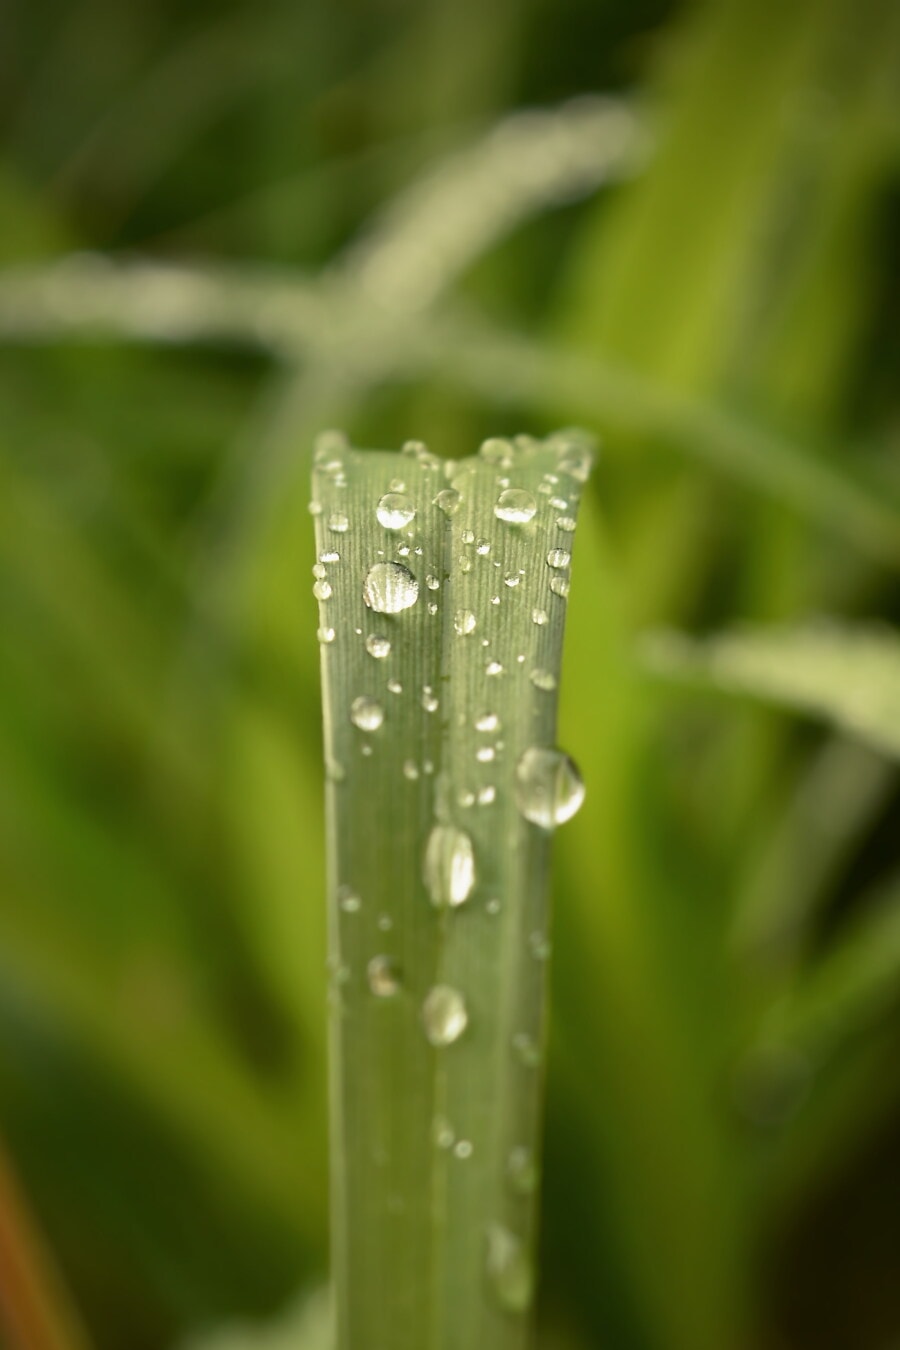 greenery, moisture, green leaf, condensation, dew, greenish yellow, purity, liquid, wet, spring time